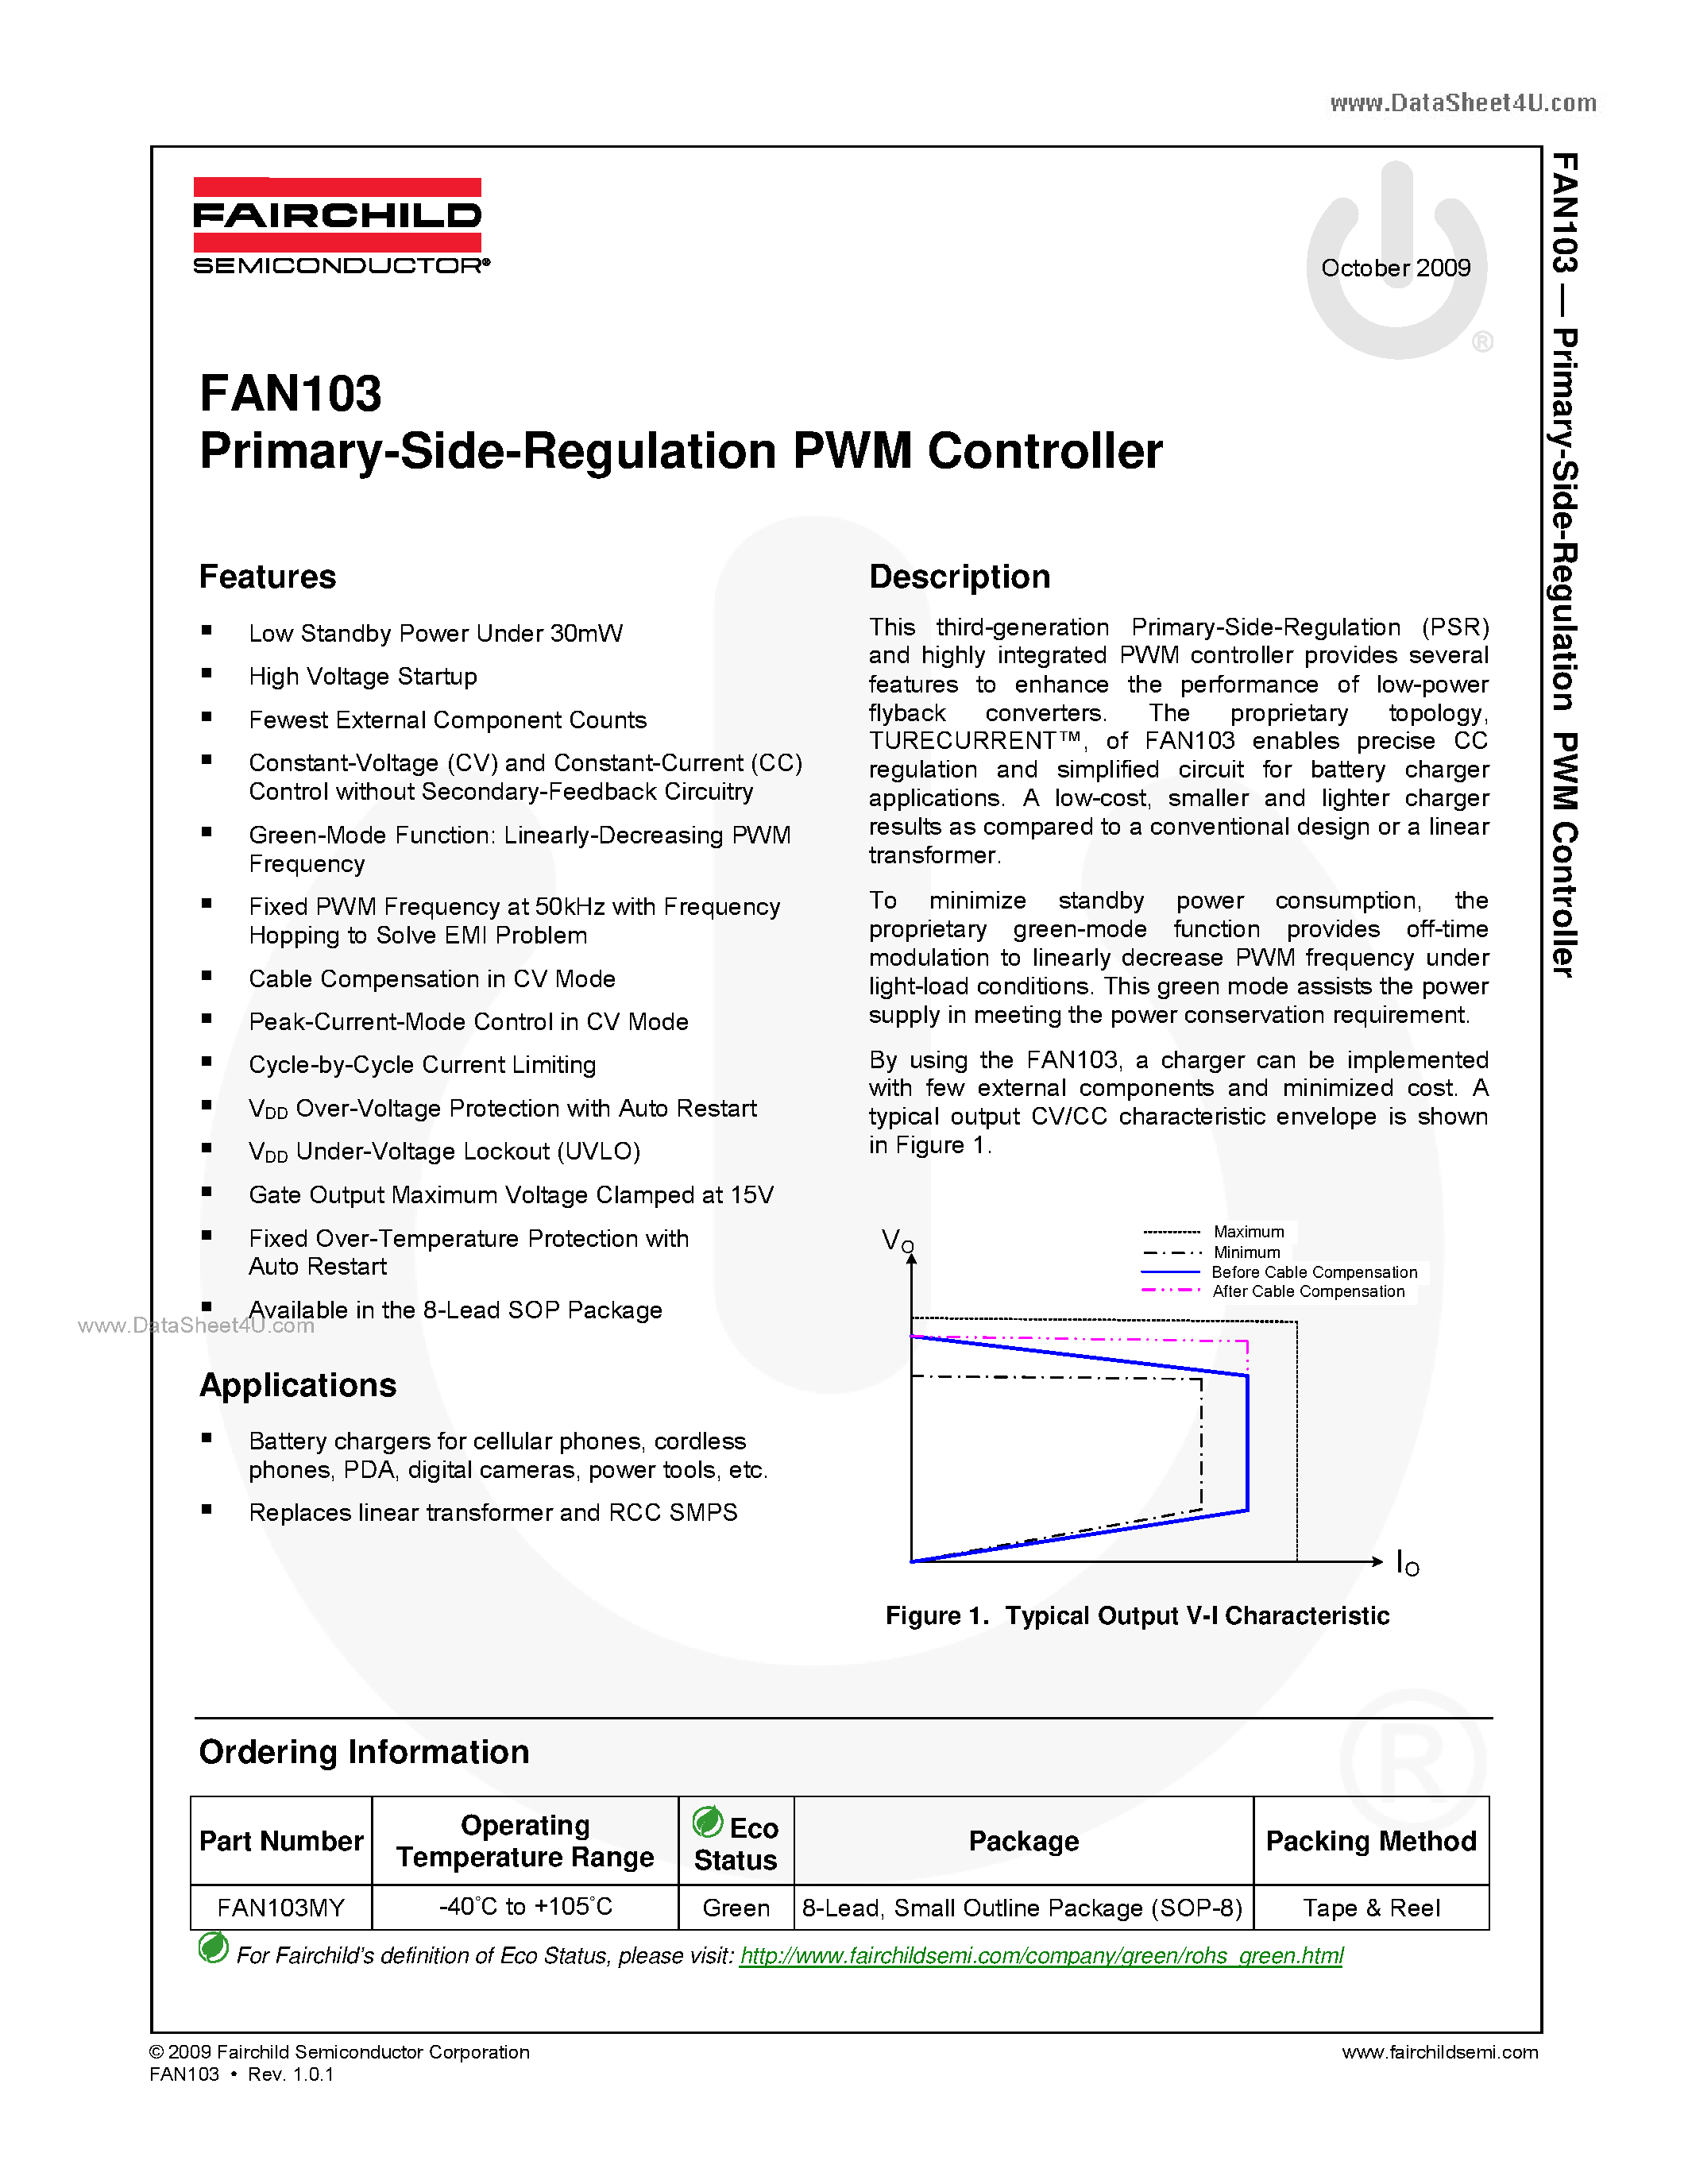 Даташит FAN103 - Primary-Side-Regulation PWM Controller страница 1